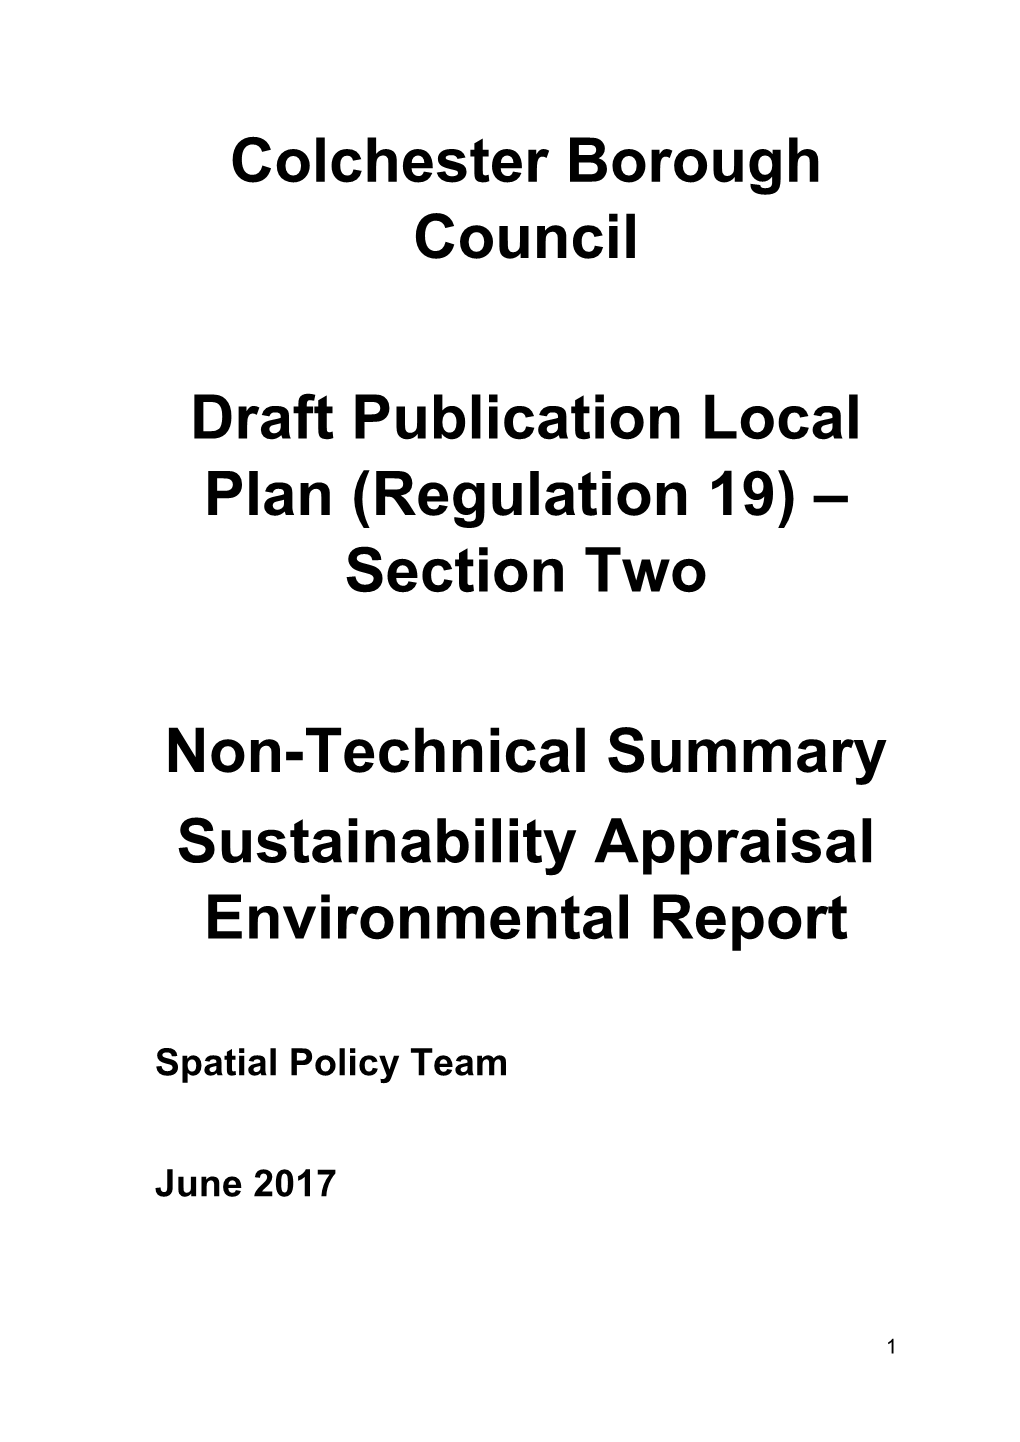 Colchester Borough Council Draft Publication Local Plan